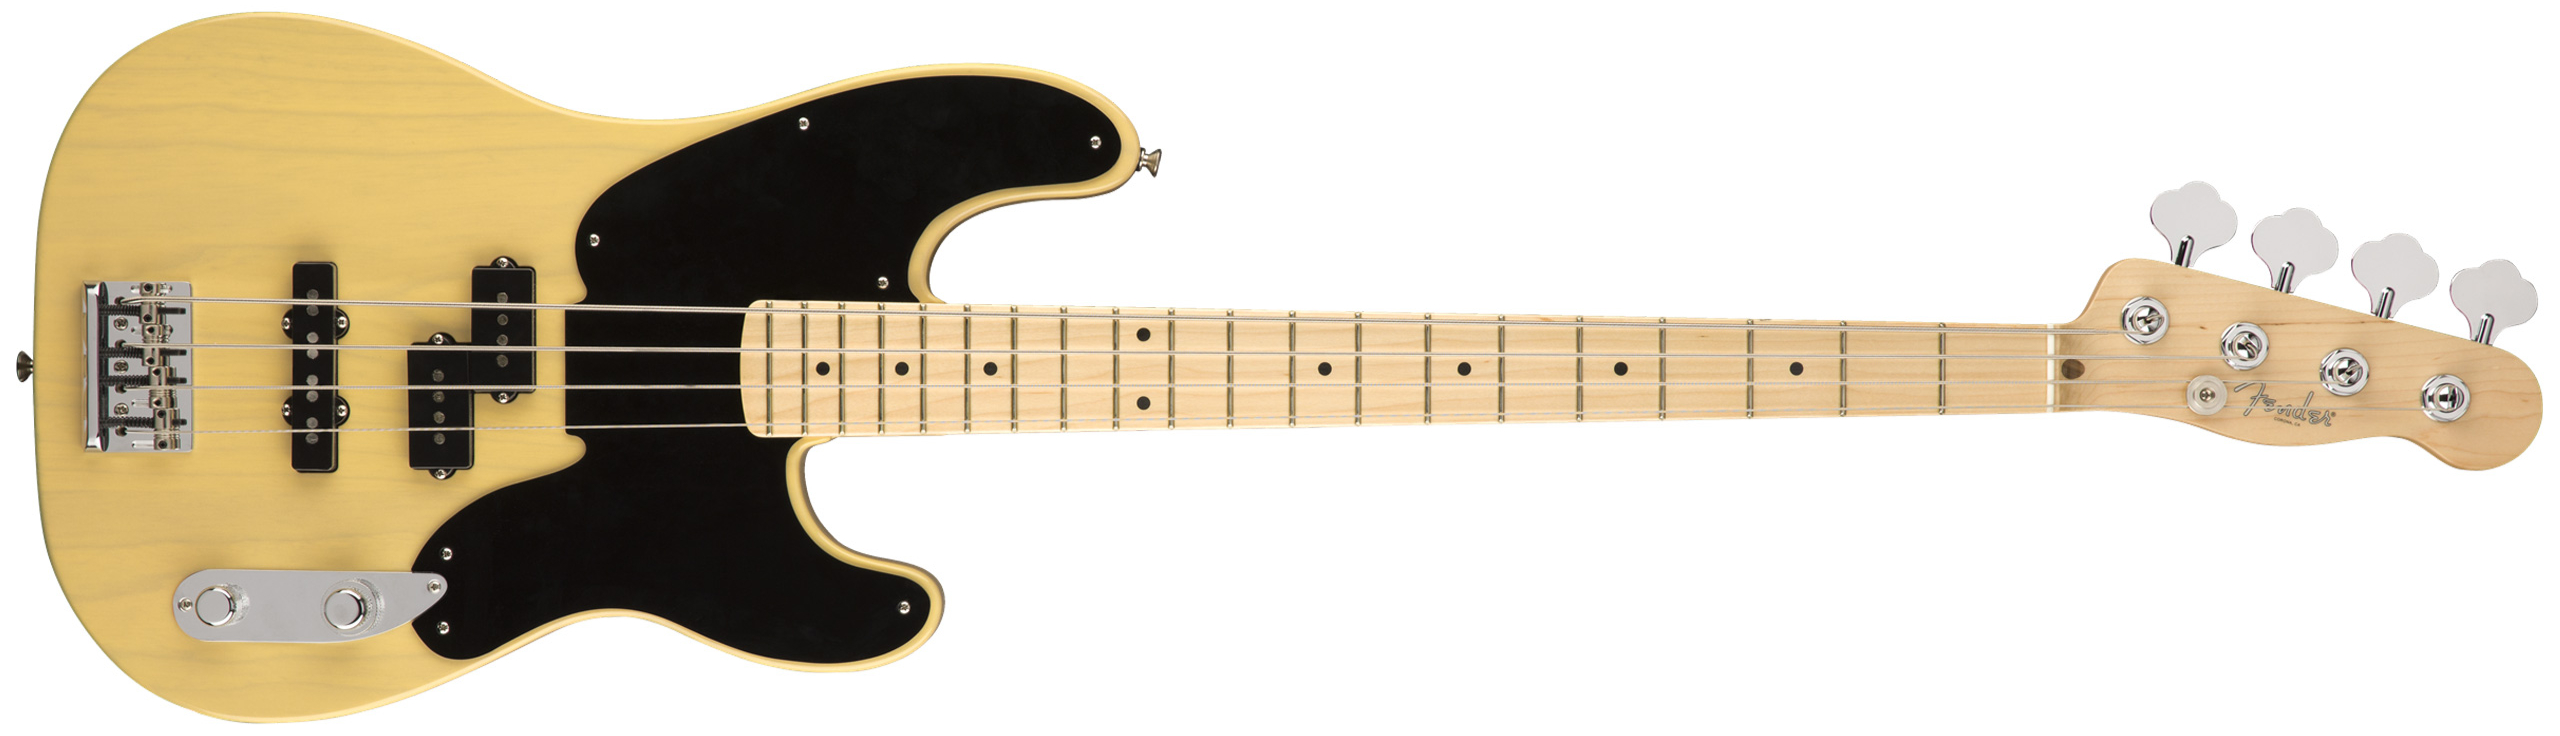 Fender Limited Edition '51 Telecaster PJ Bass MN Blackguard Blonde | MUSIC  STORE professional